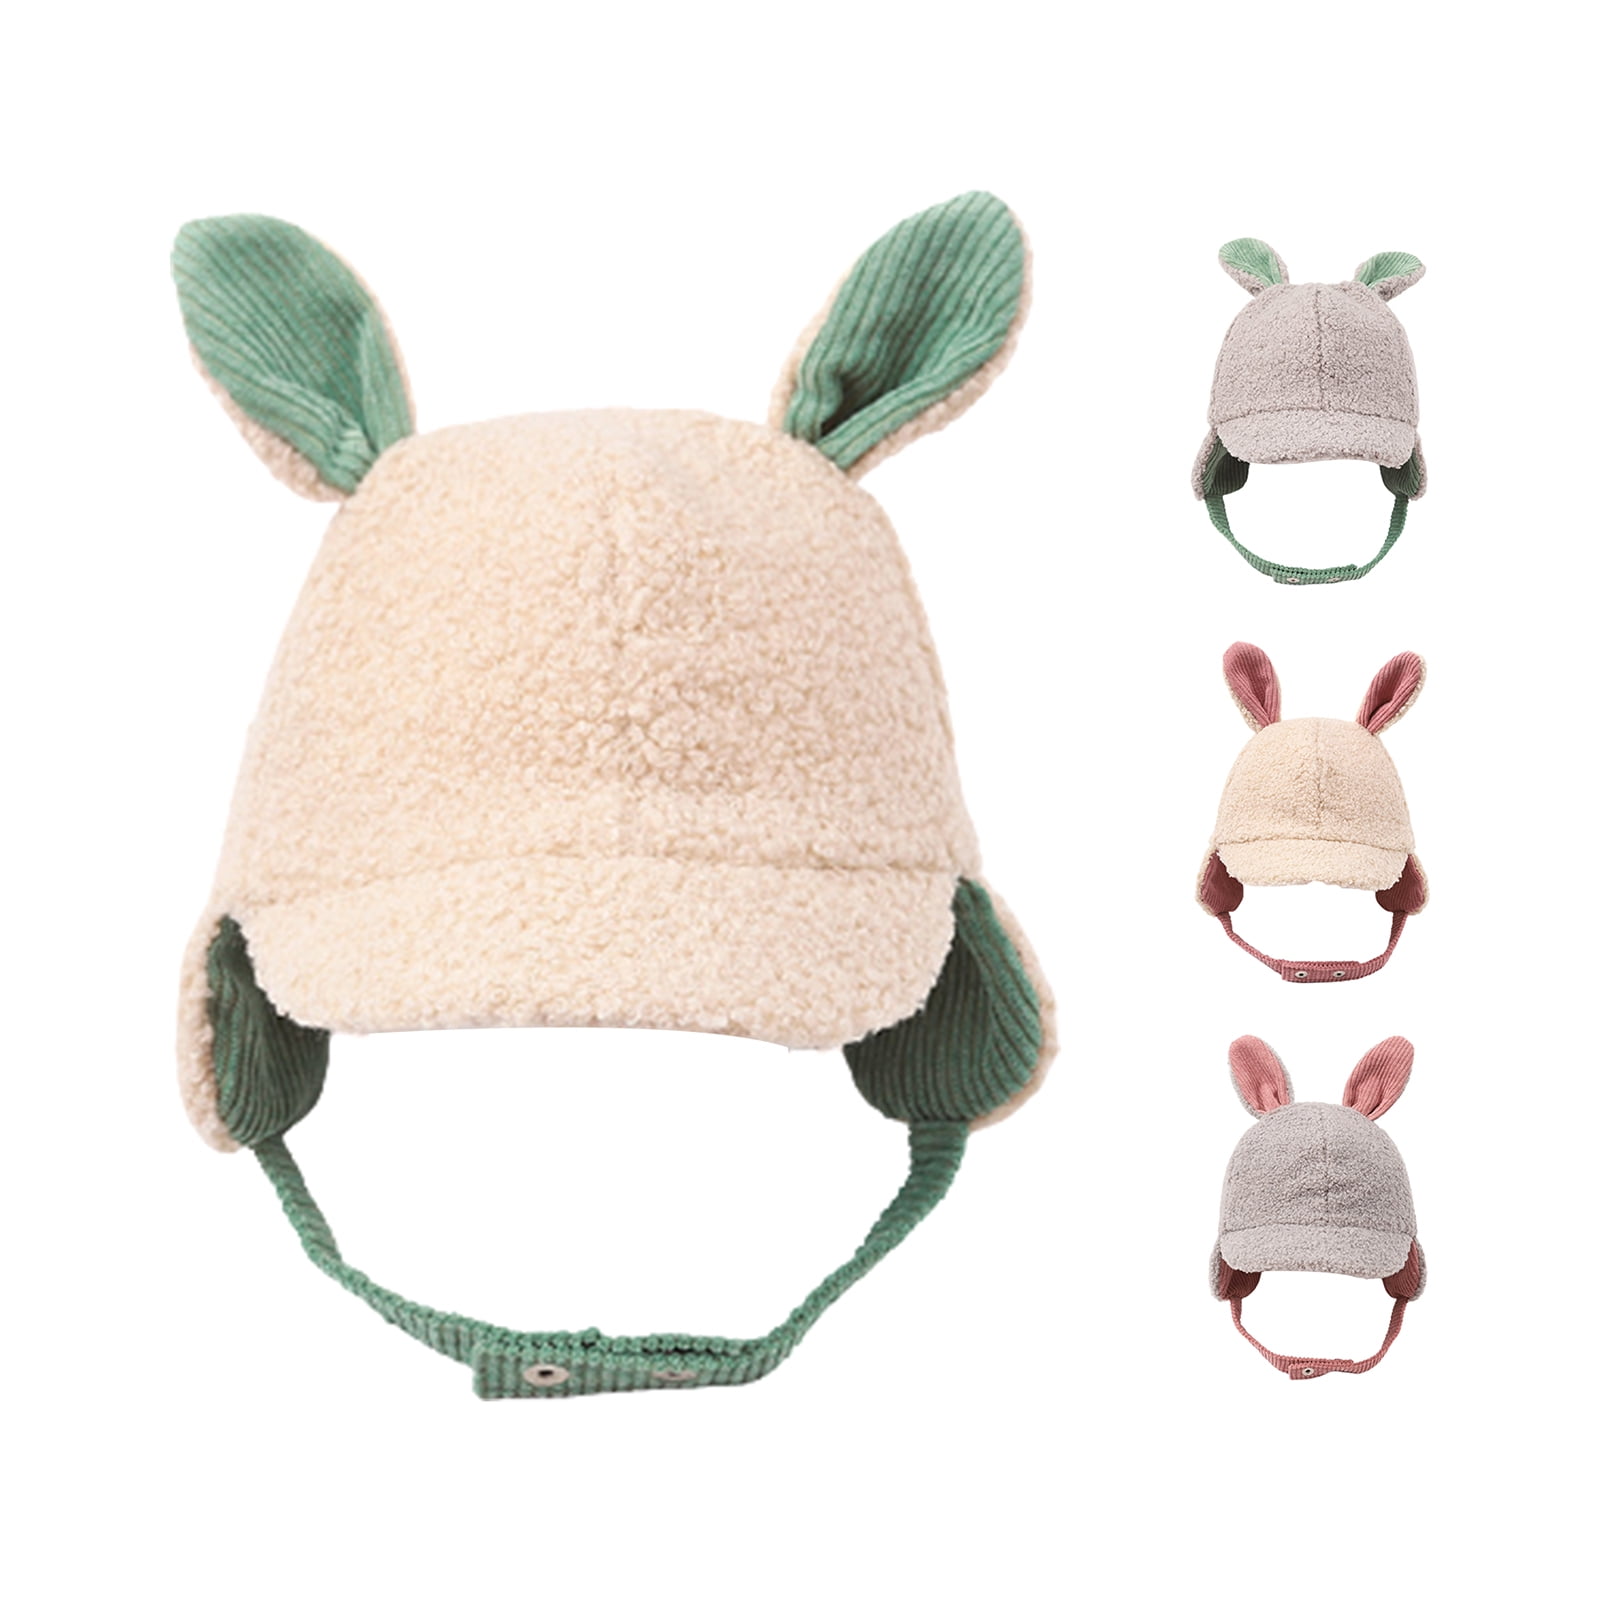 Details about   AB_ Autumn Baby Winter Children Fleece Rabbit Ear Pattern Cap Adjustable Warm Ha 